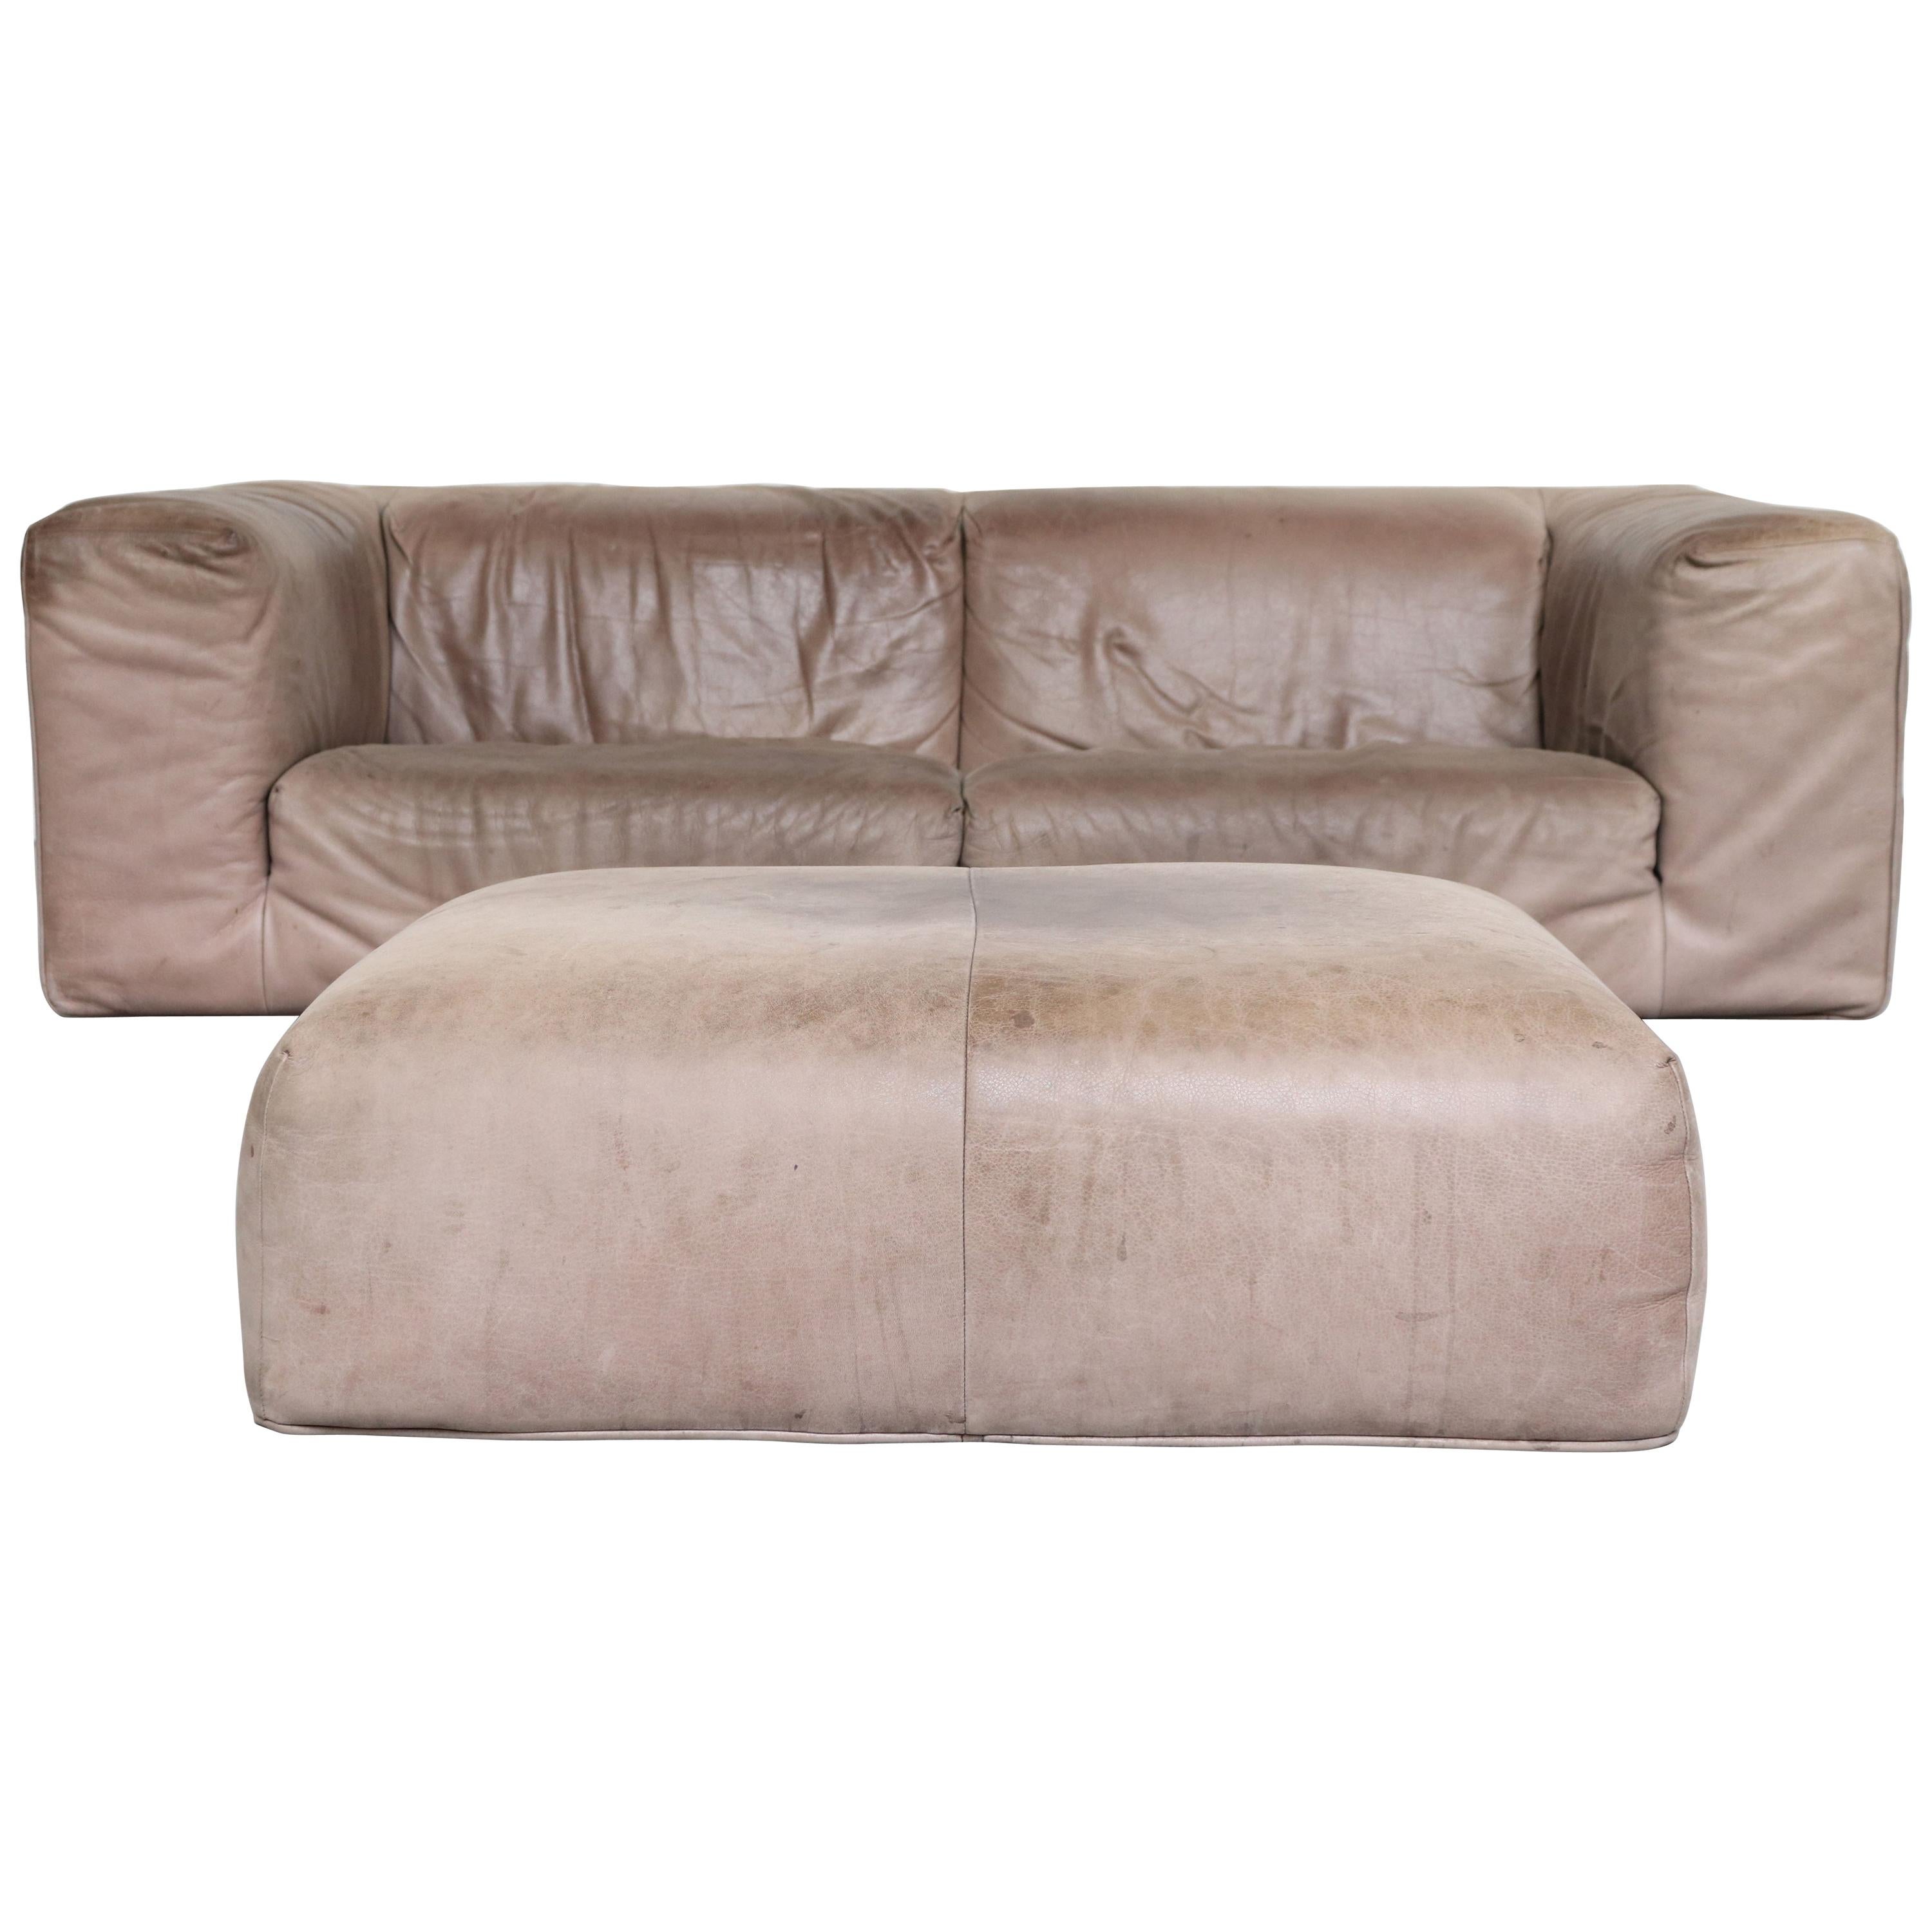 Gerard Van Den Berg Soft Form Leather Sofa and Ottoman